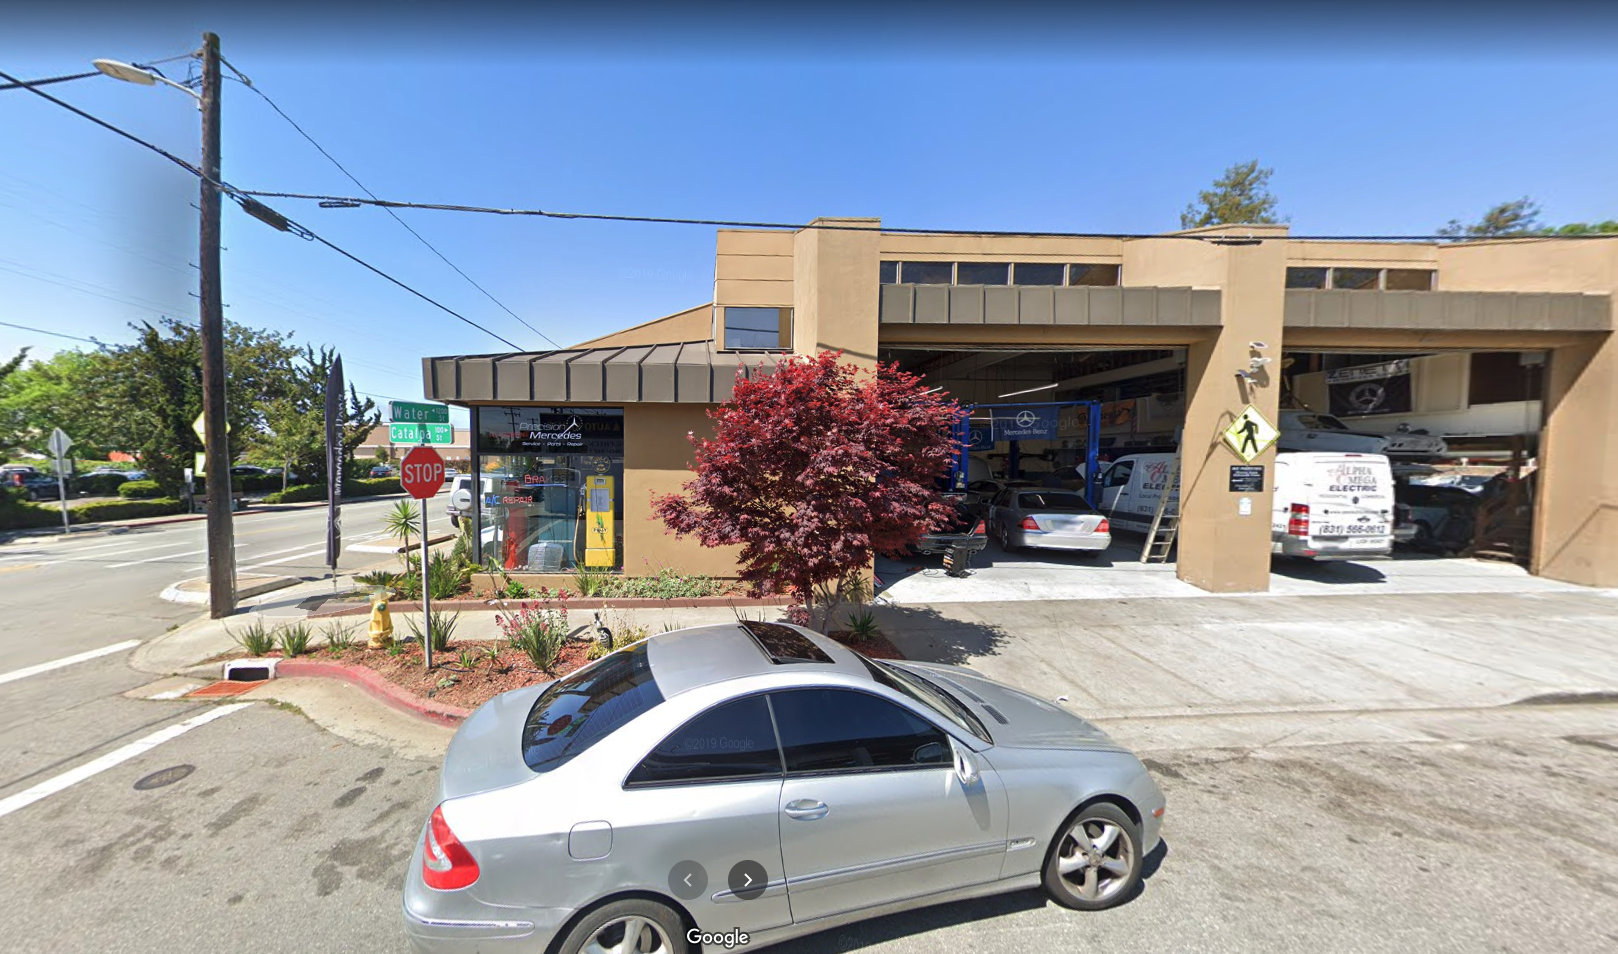 Google maps street view of shop